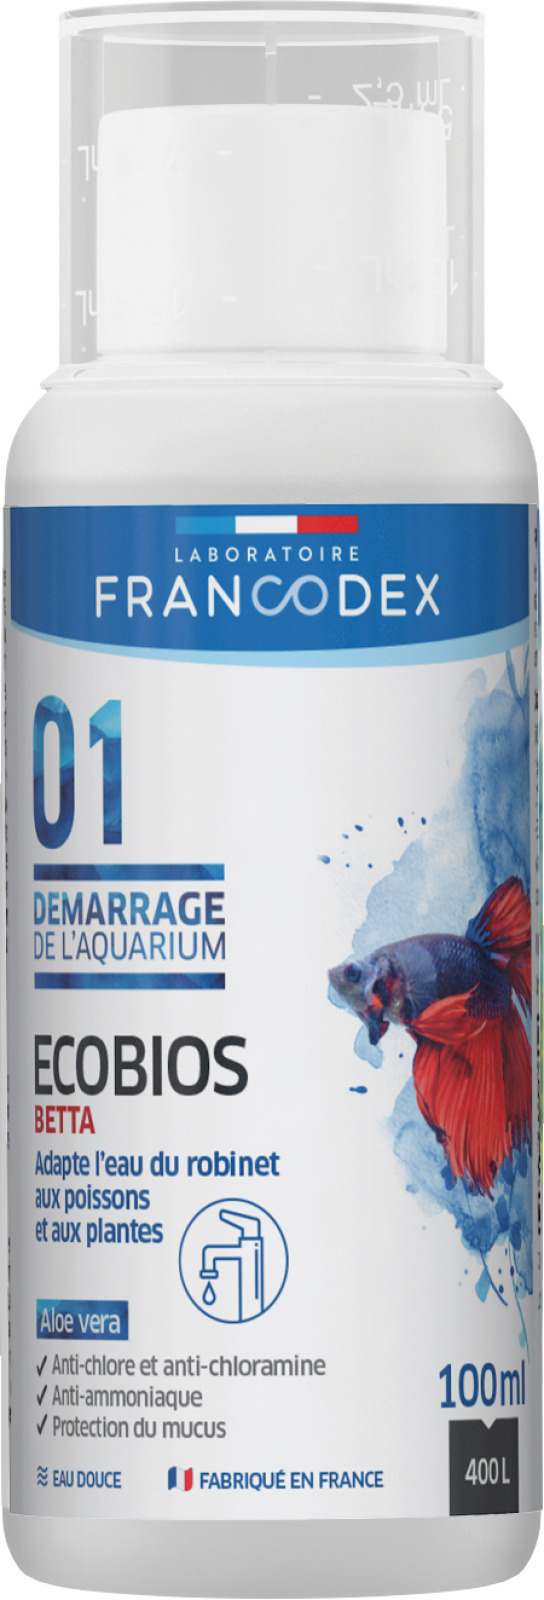 Acondicionador de agua FRANCODEX Ecobios Betta